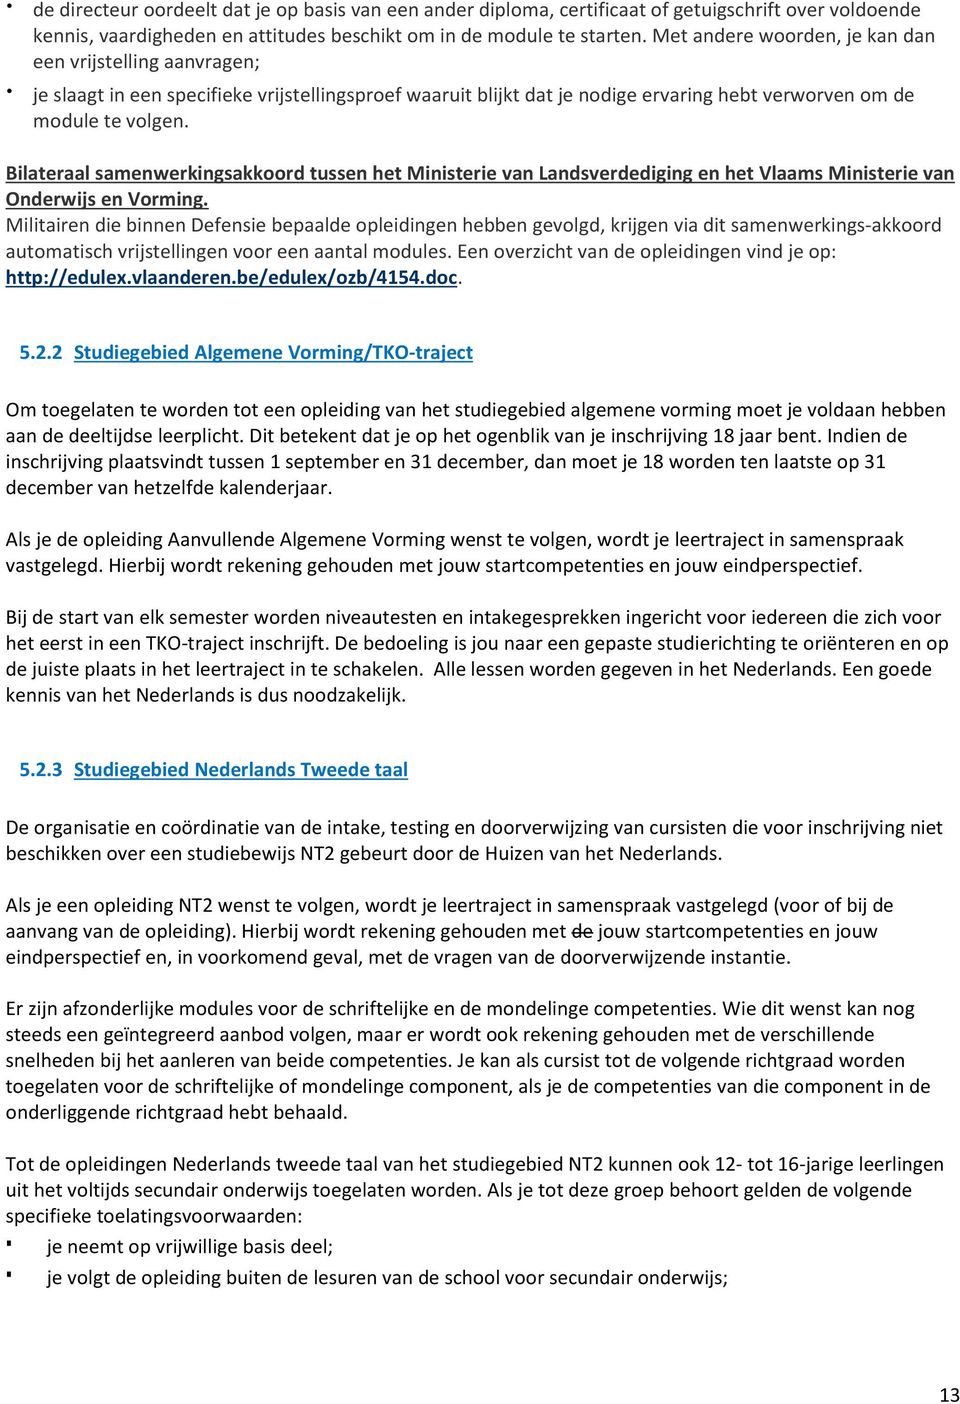 Bilateraal samenwerkingsakkoord tussen het Ministerie van Landsverdediging en het Vlaams Ministerie van Onderwijs en Vorming.